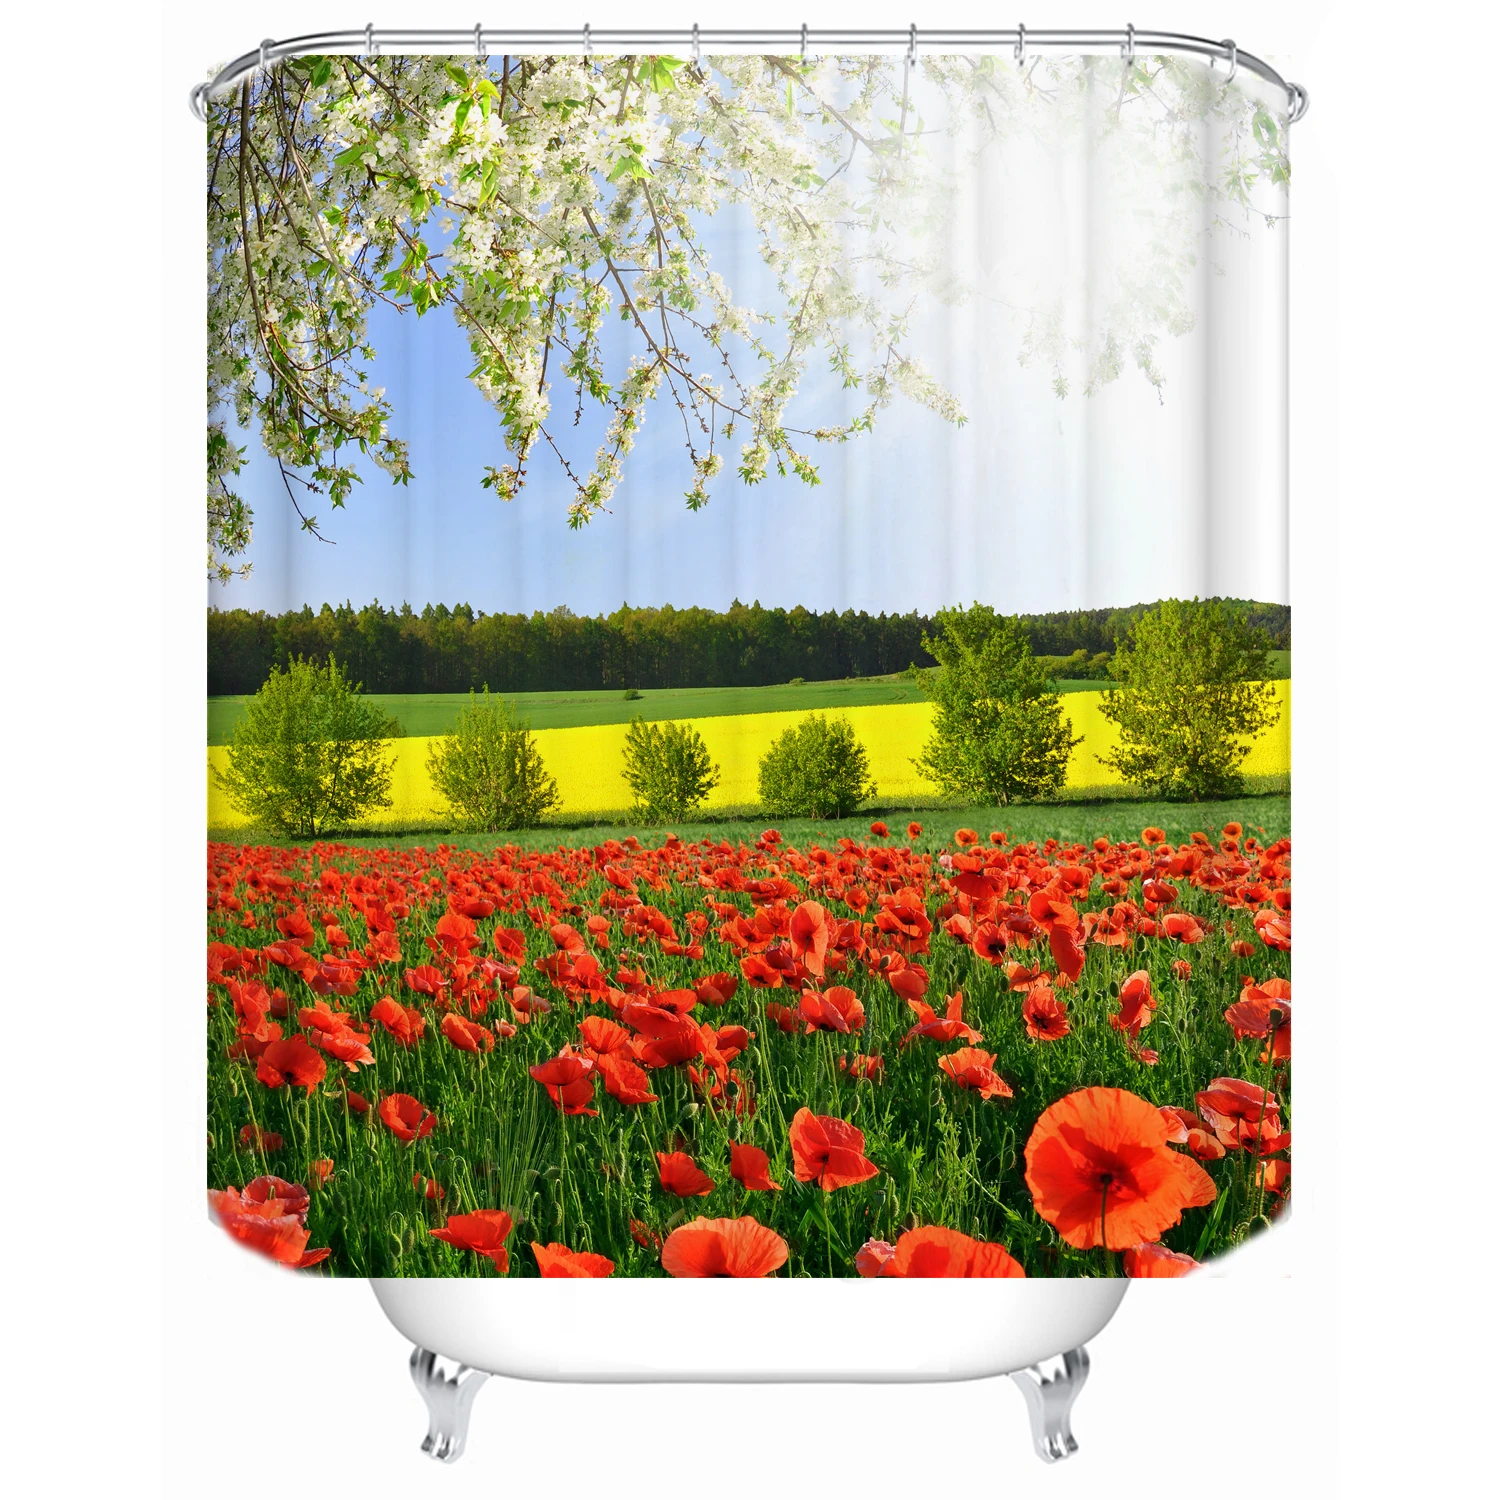 

180x180 bathroom shower curtain partition bathtub waterproof shower curtain red green flower sea custom printed shower curtain, Picture